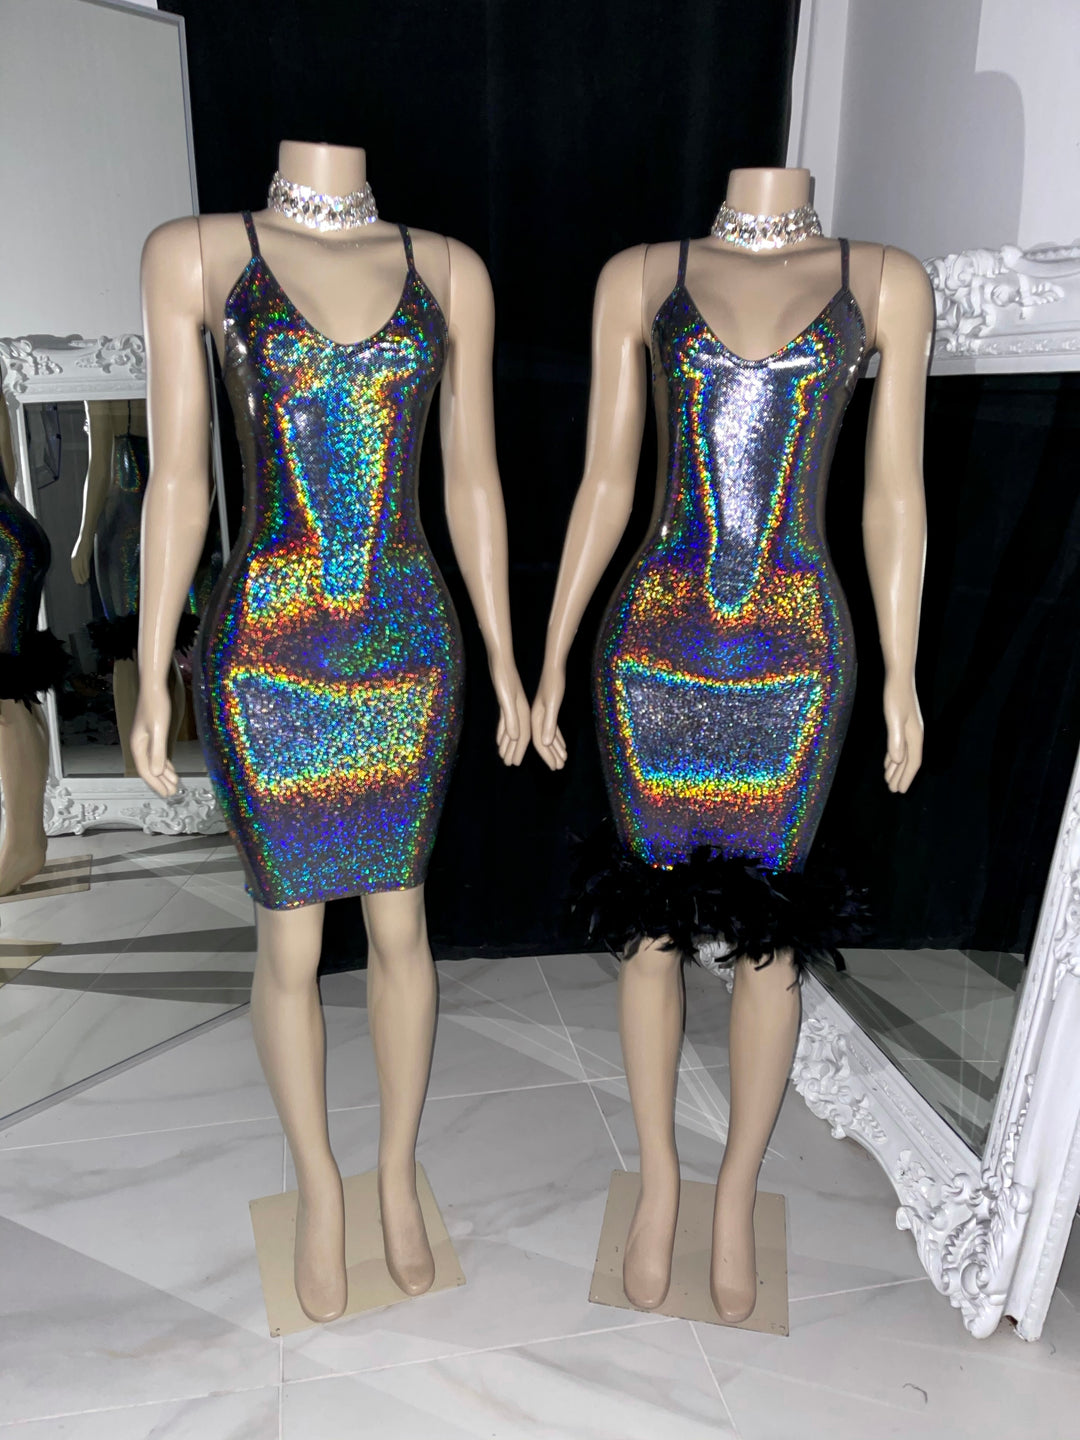 The Hologram Dress